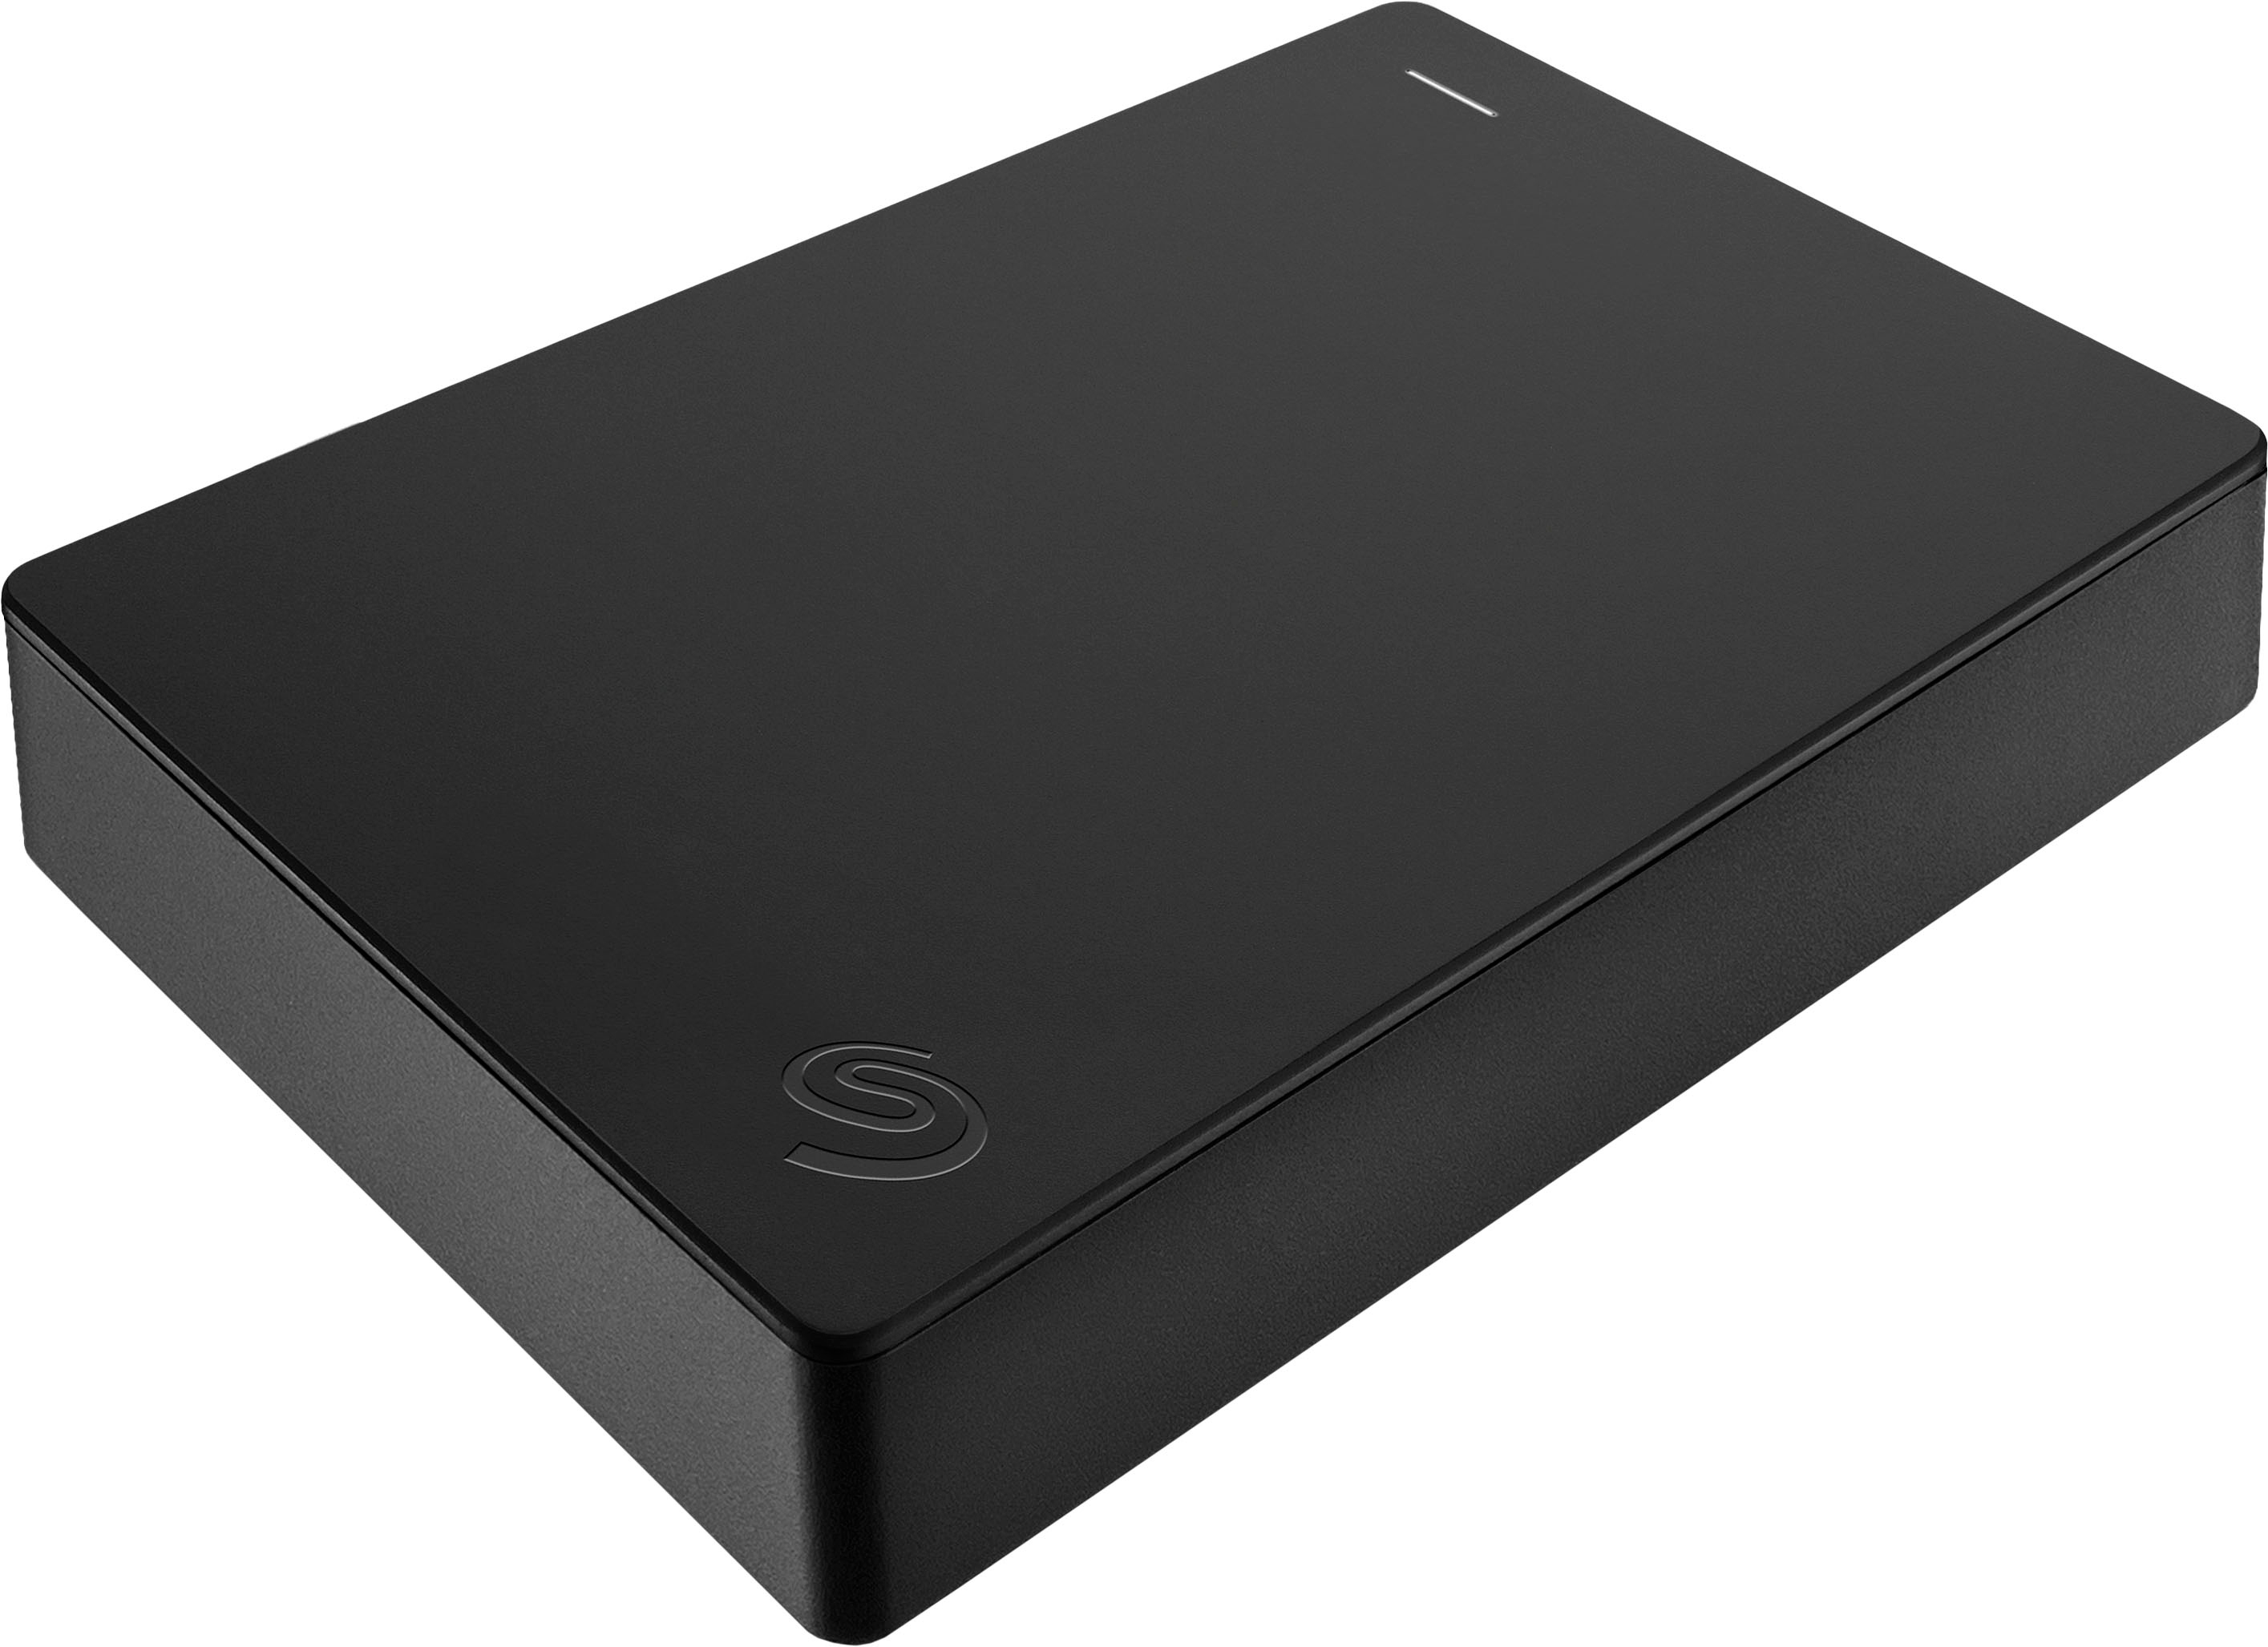 Seagate Portable 5tb External Hard Drive HDD – USB 3.0 (STGX5000400)